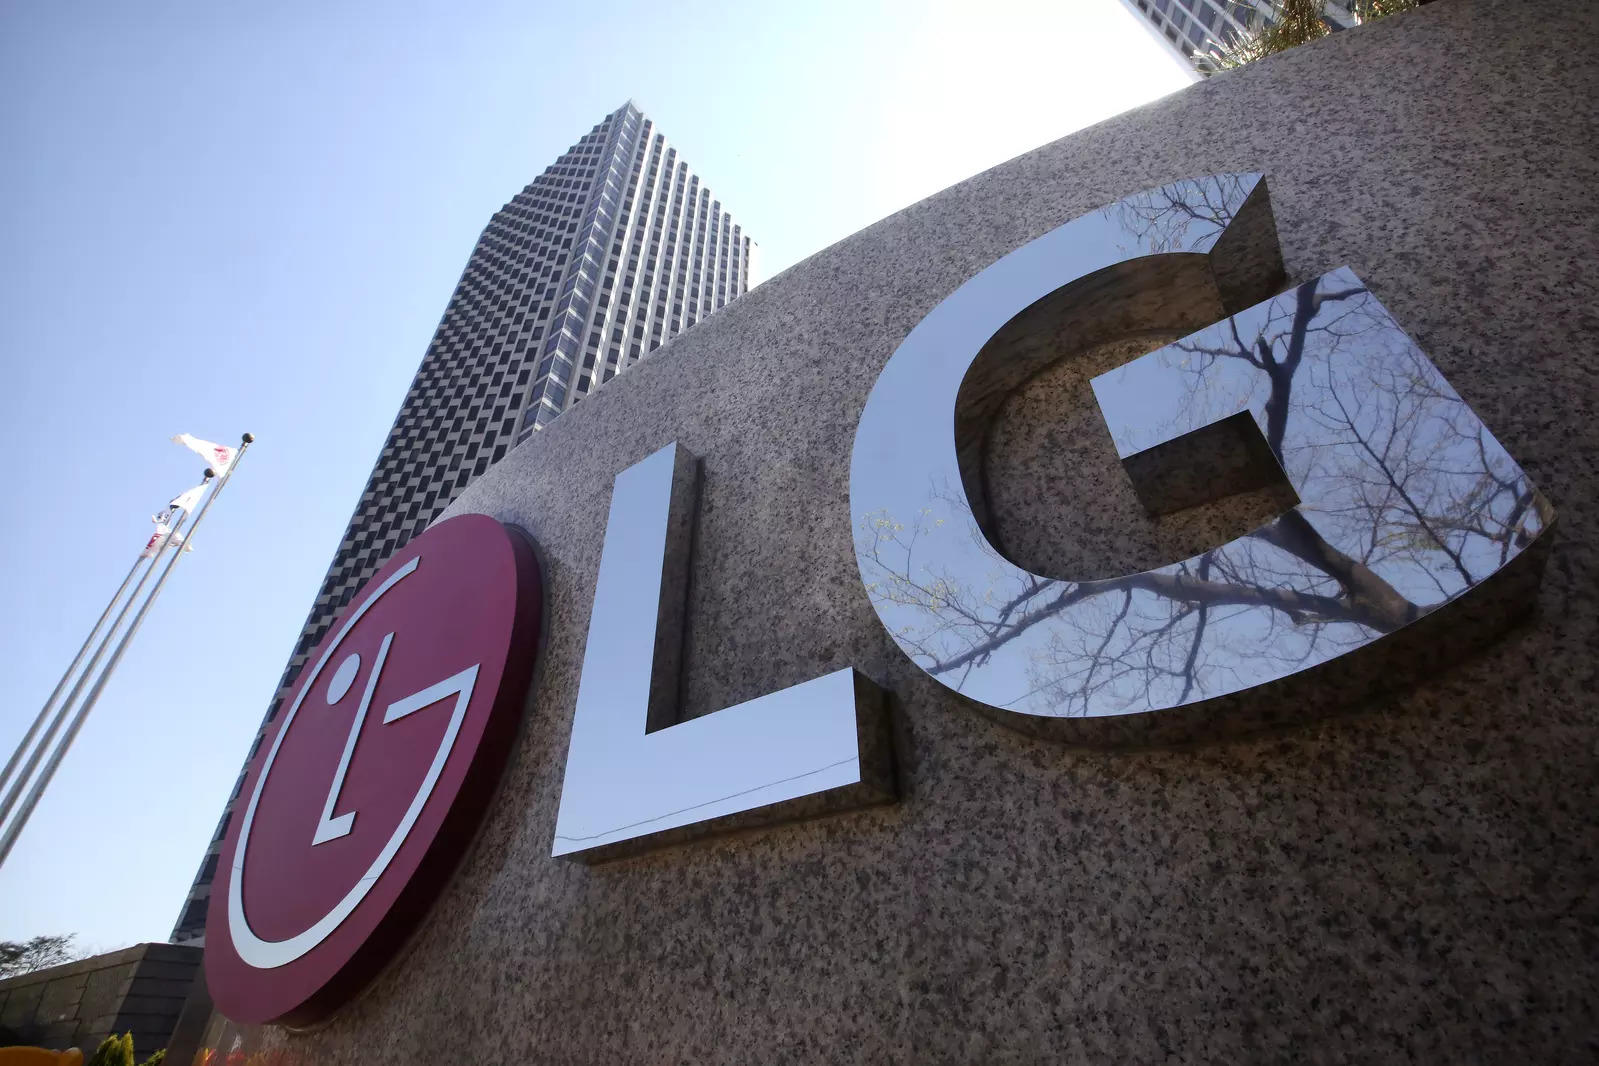 LG Display's Q2 profit beats estimates as panel prices rise; shares up